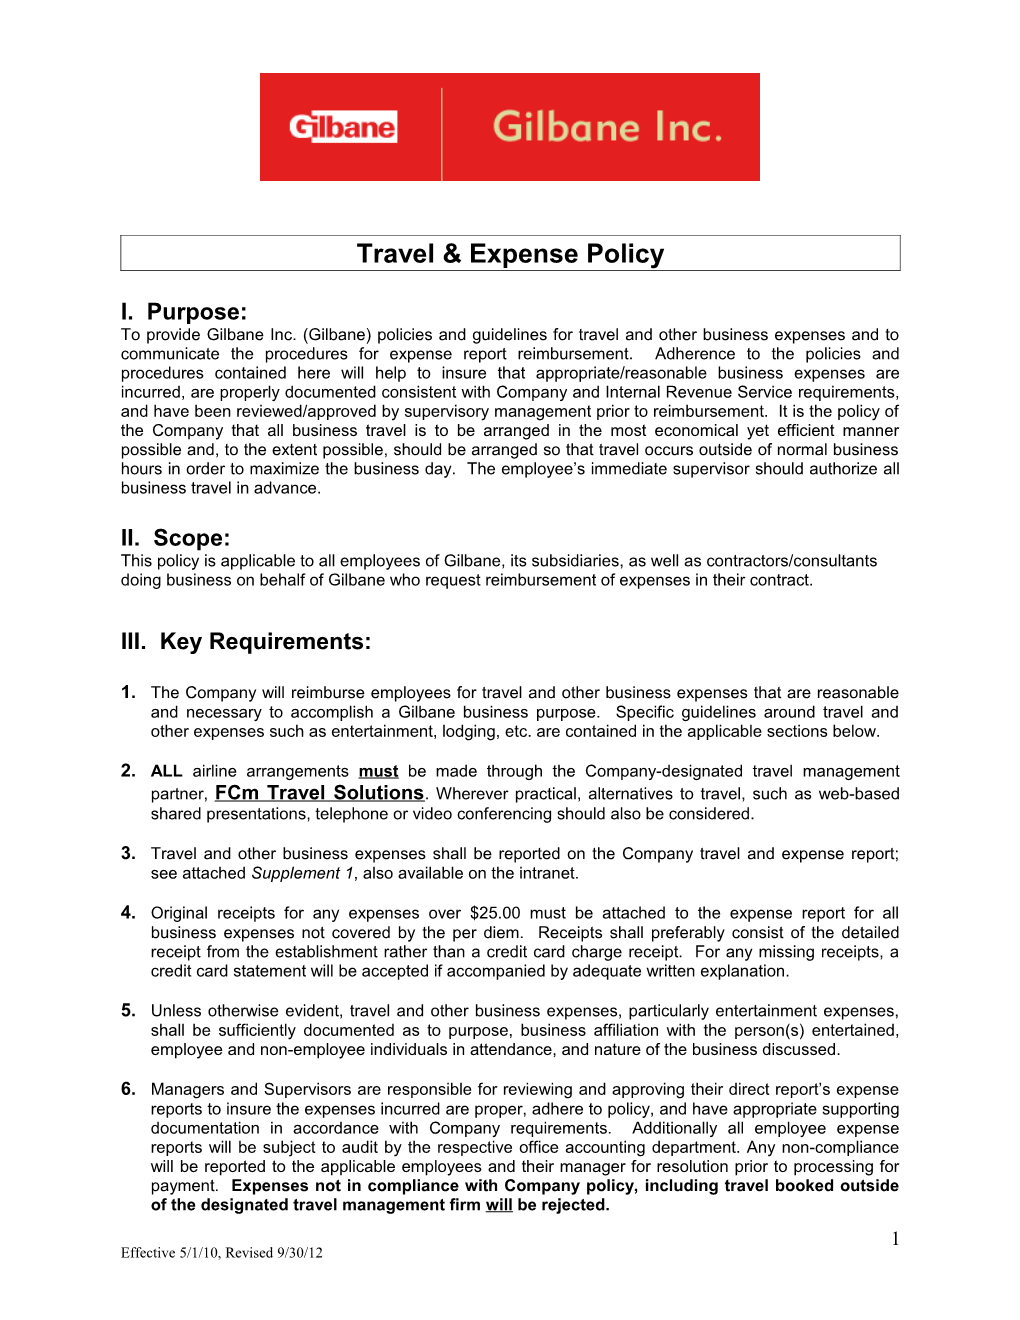 Gilbane Travel Policy Eff 5 1 2010 Rev 4 20 12